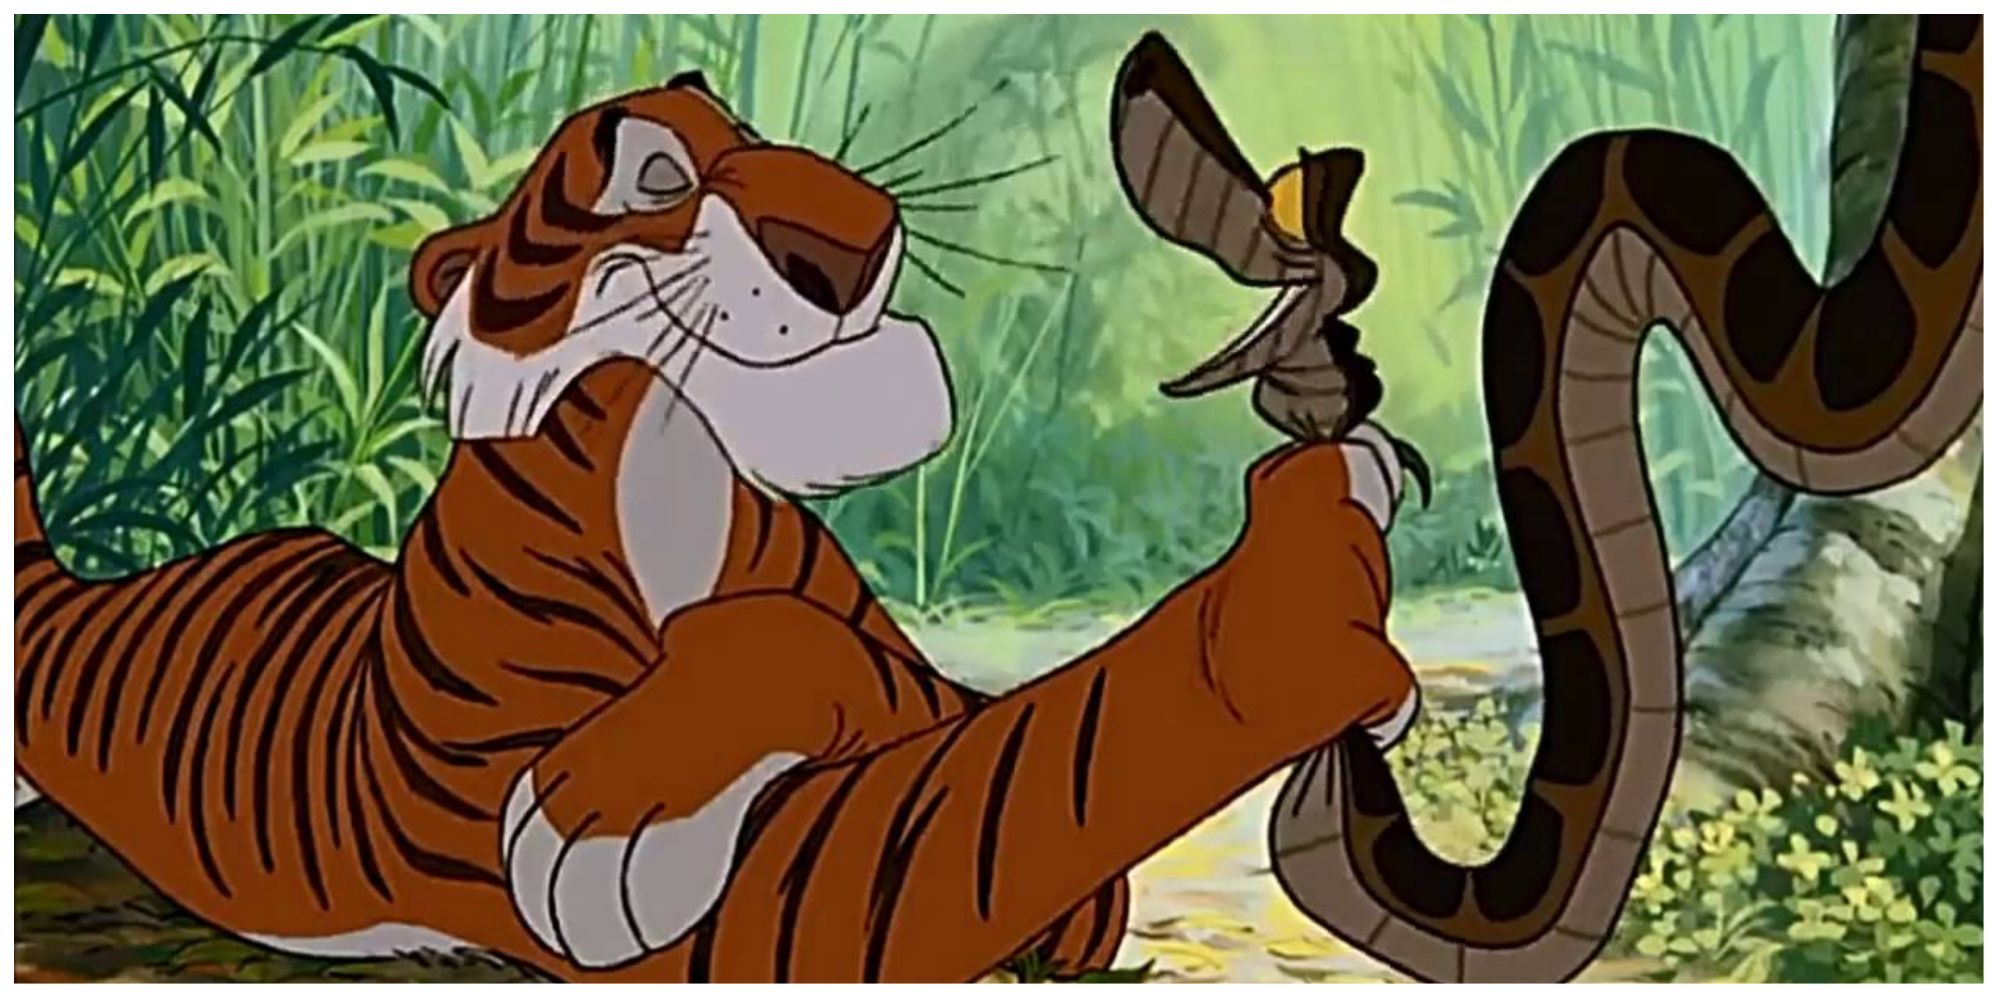 Shere Khan and Kaa in The Jungle Book (1967).